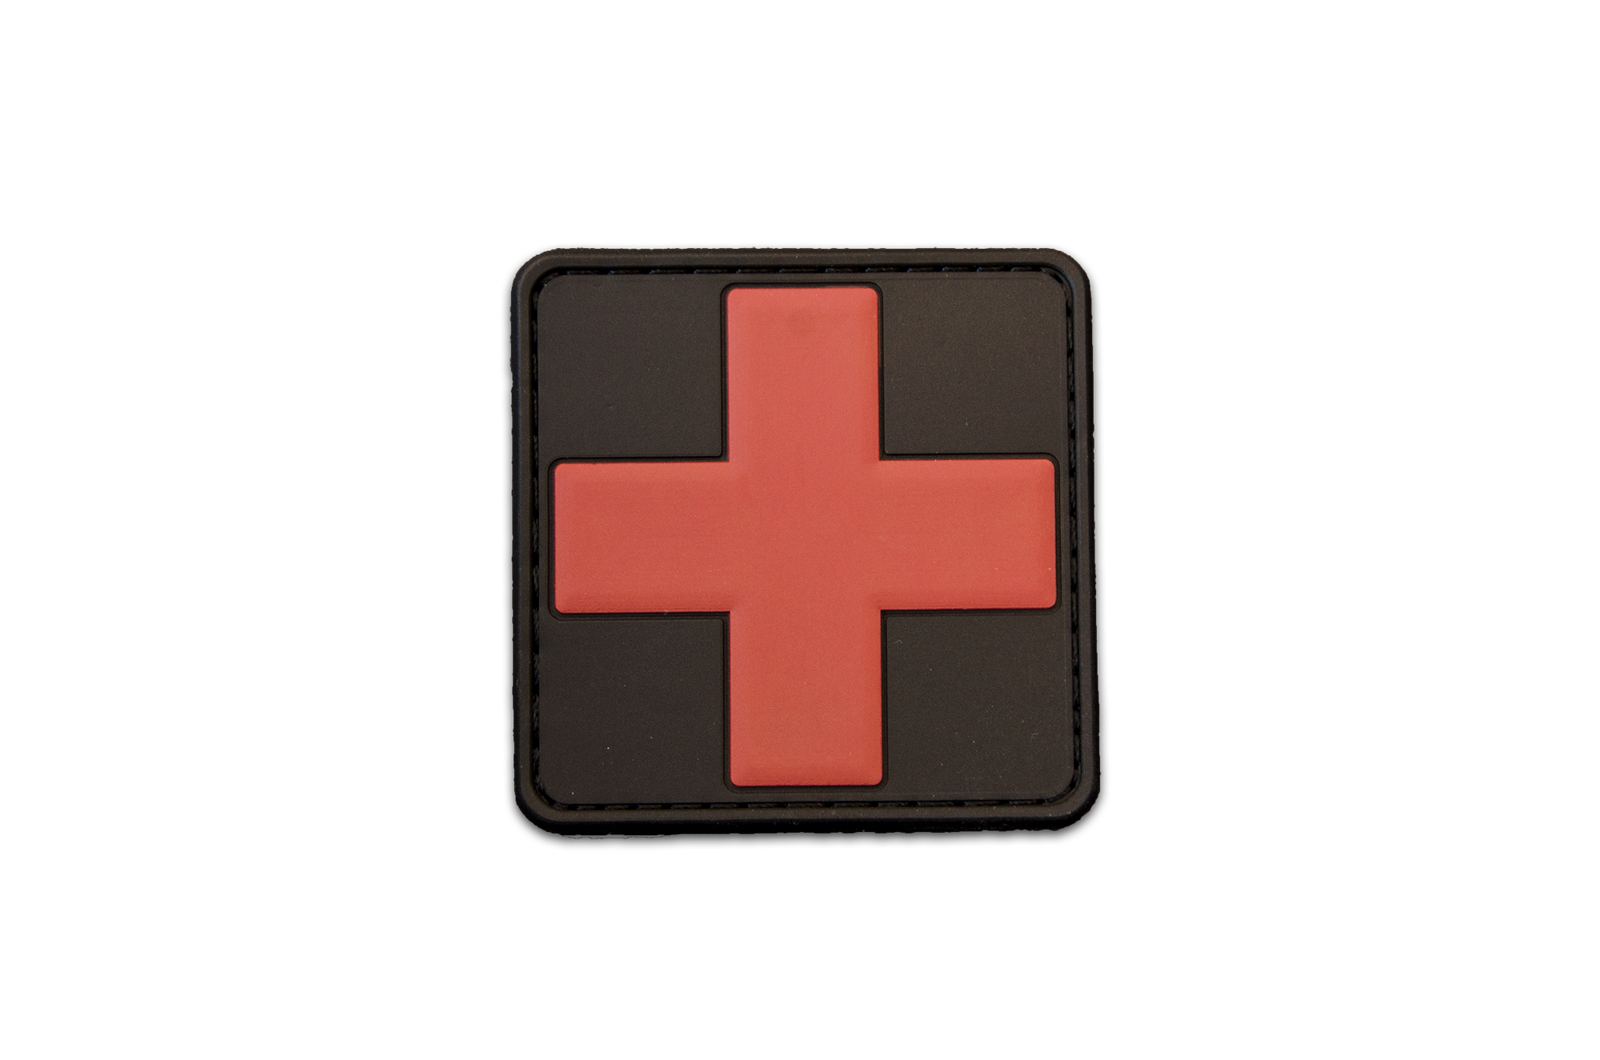 Medic patch